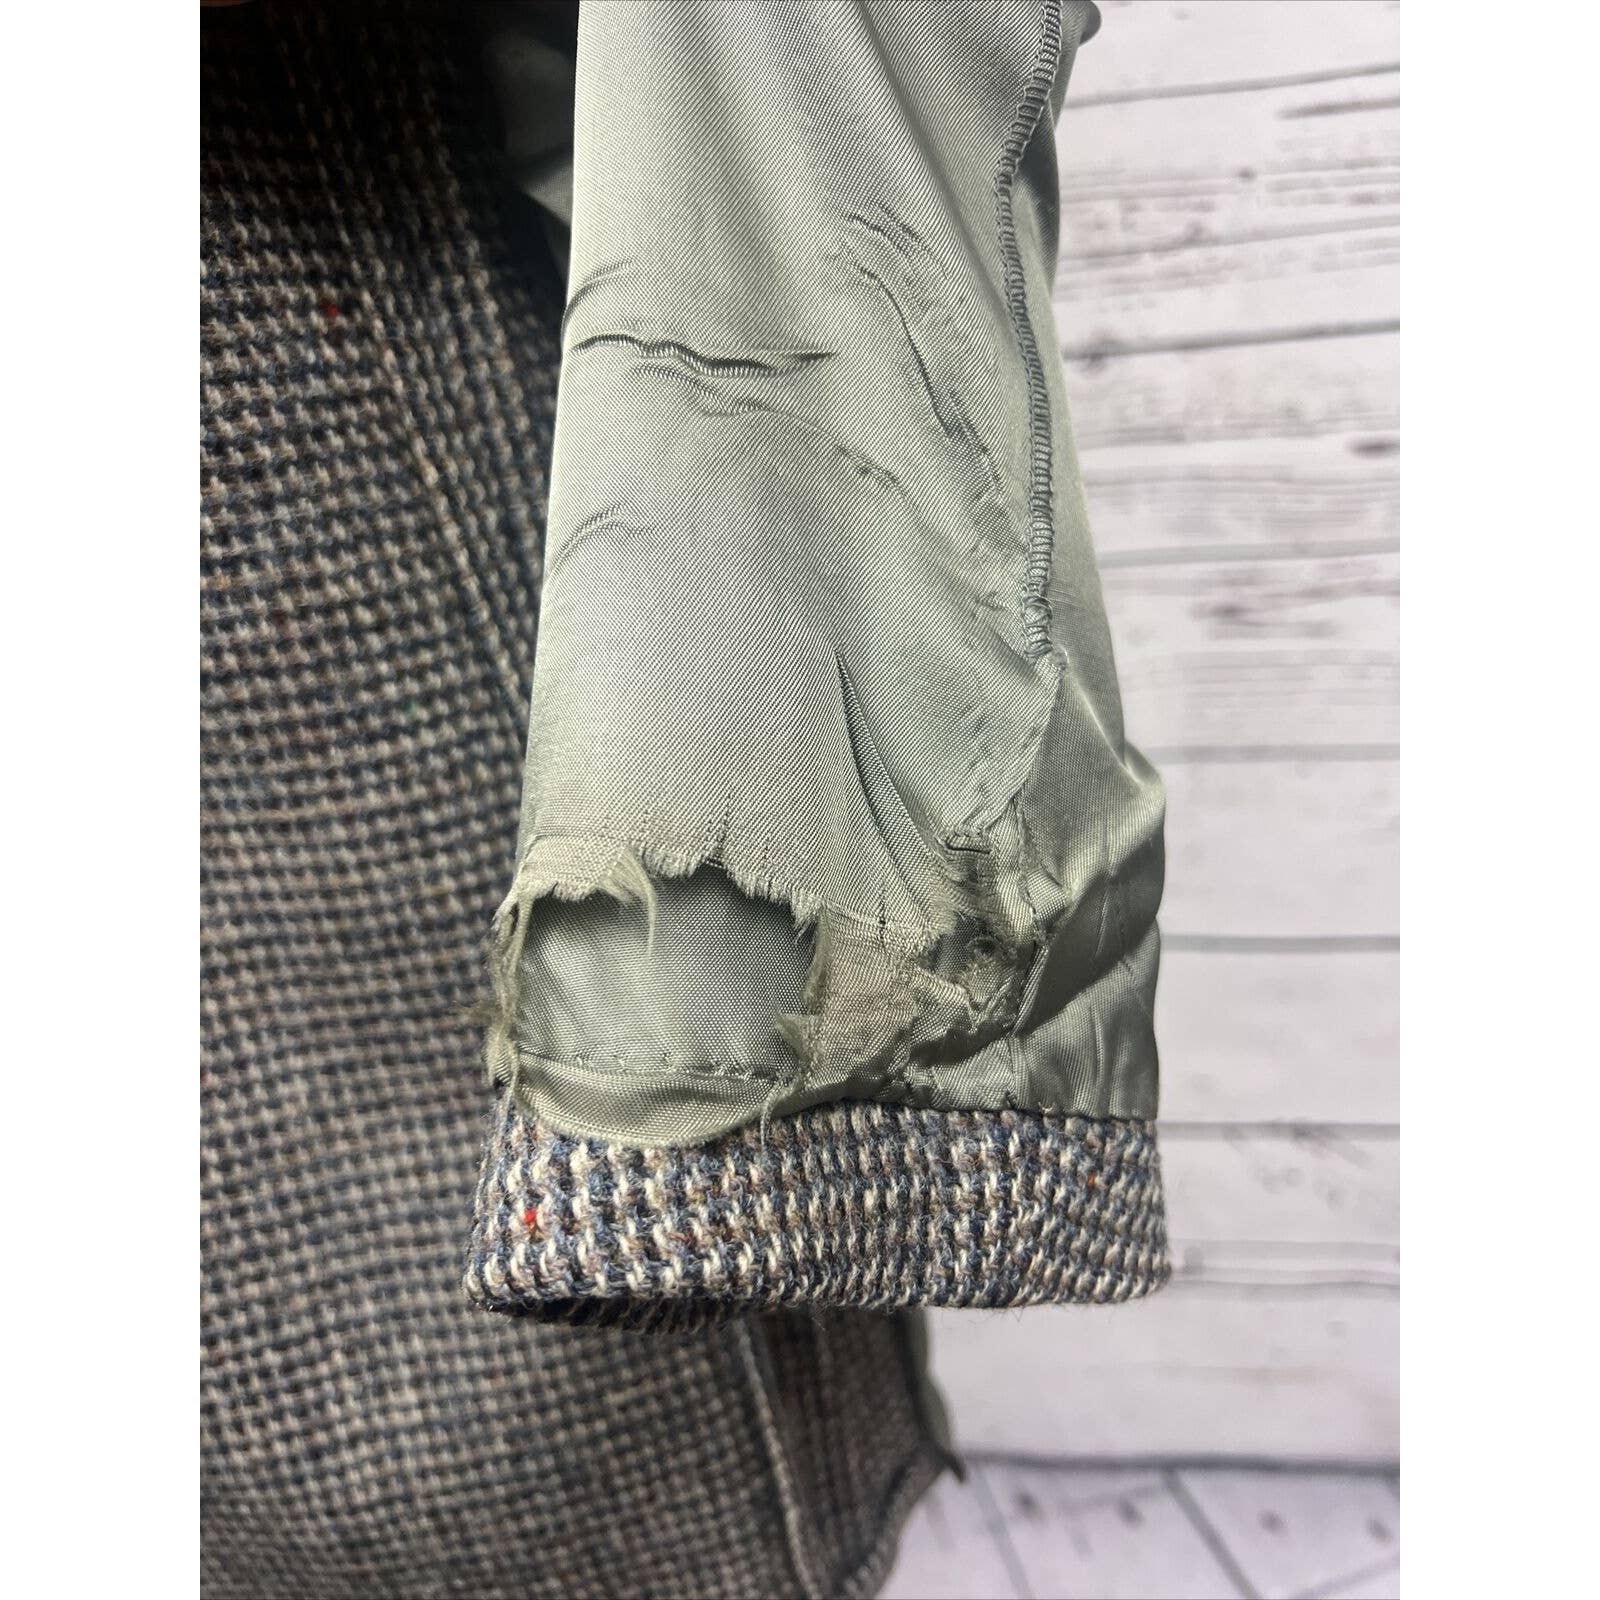 Harris Tweed 2 Button Sport Coat Mens 42L 100% Scottish Wool Brown Jacket Blazer